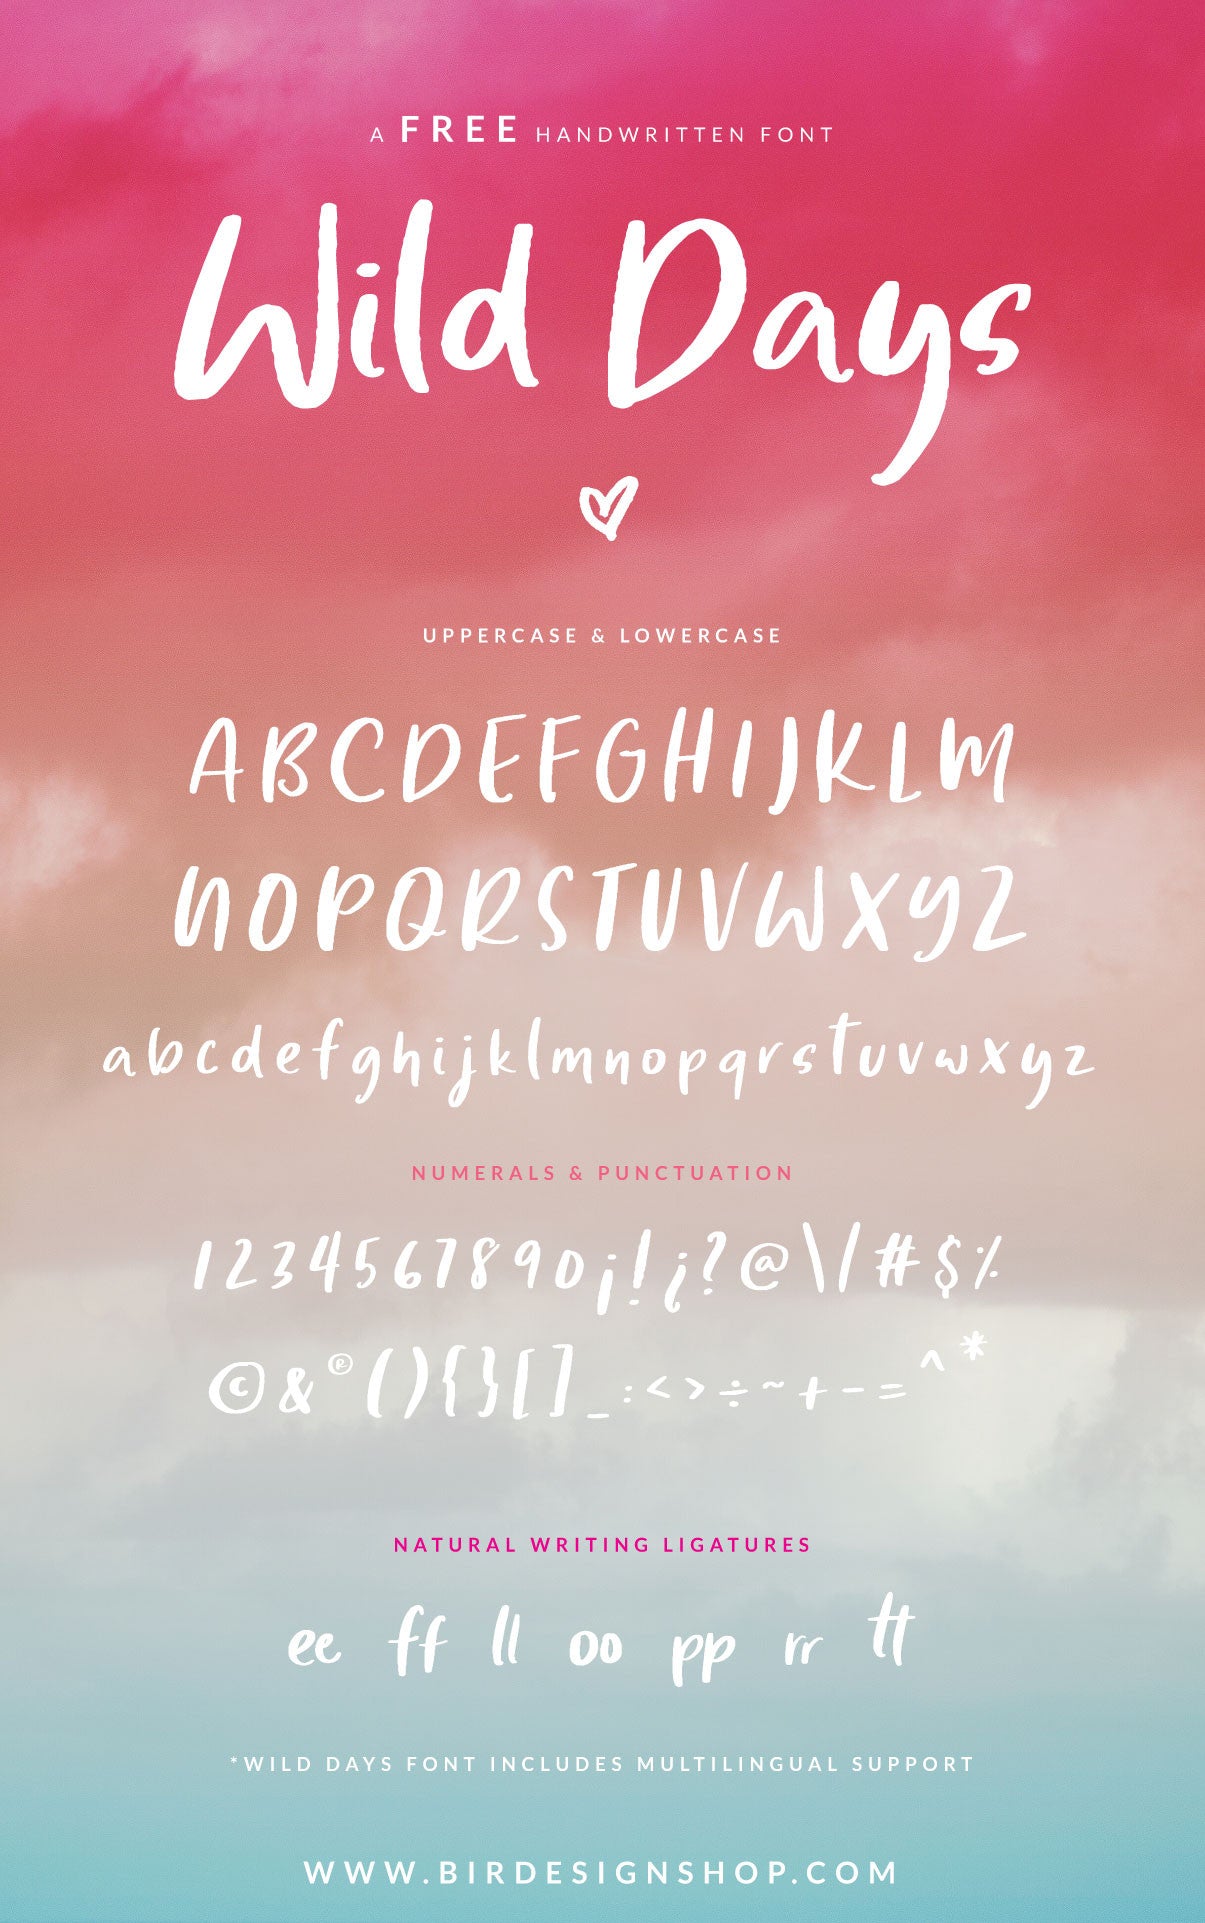 Free handwritten font by Birdesign - Free script font with ligatures